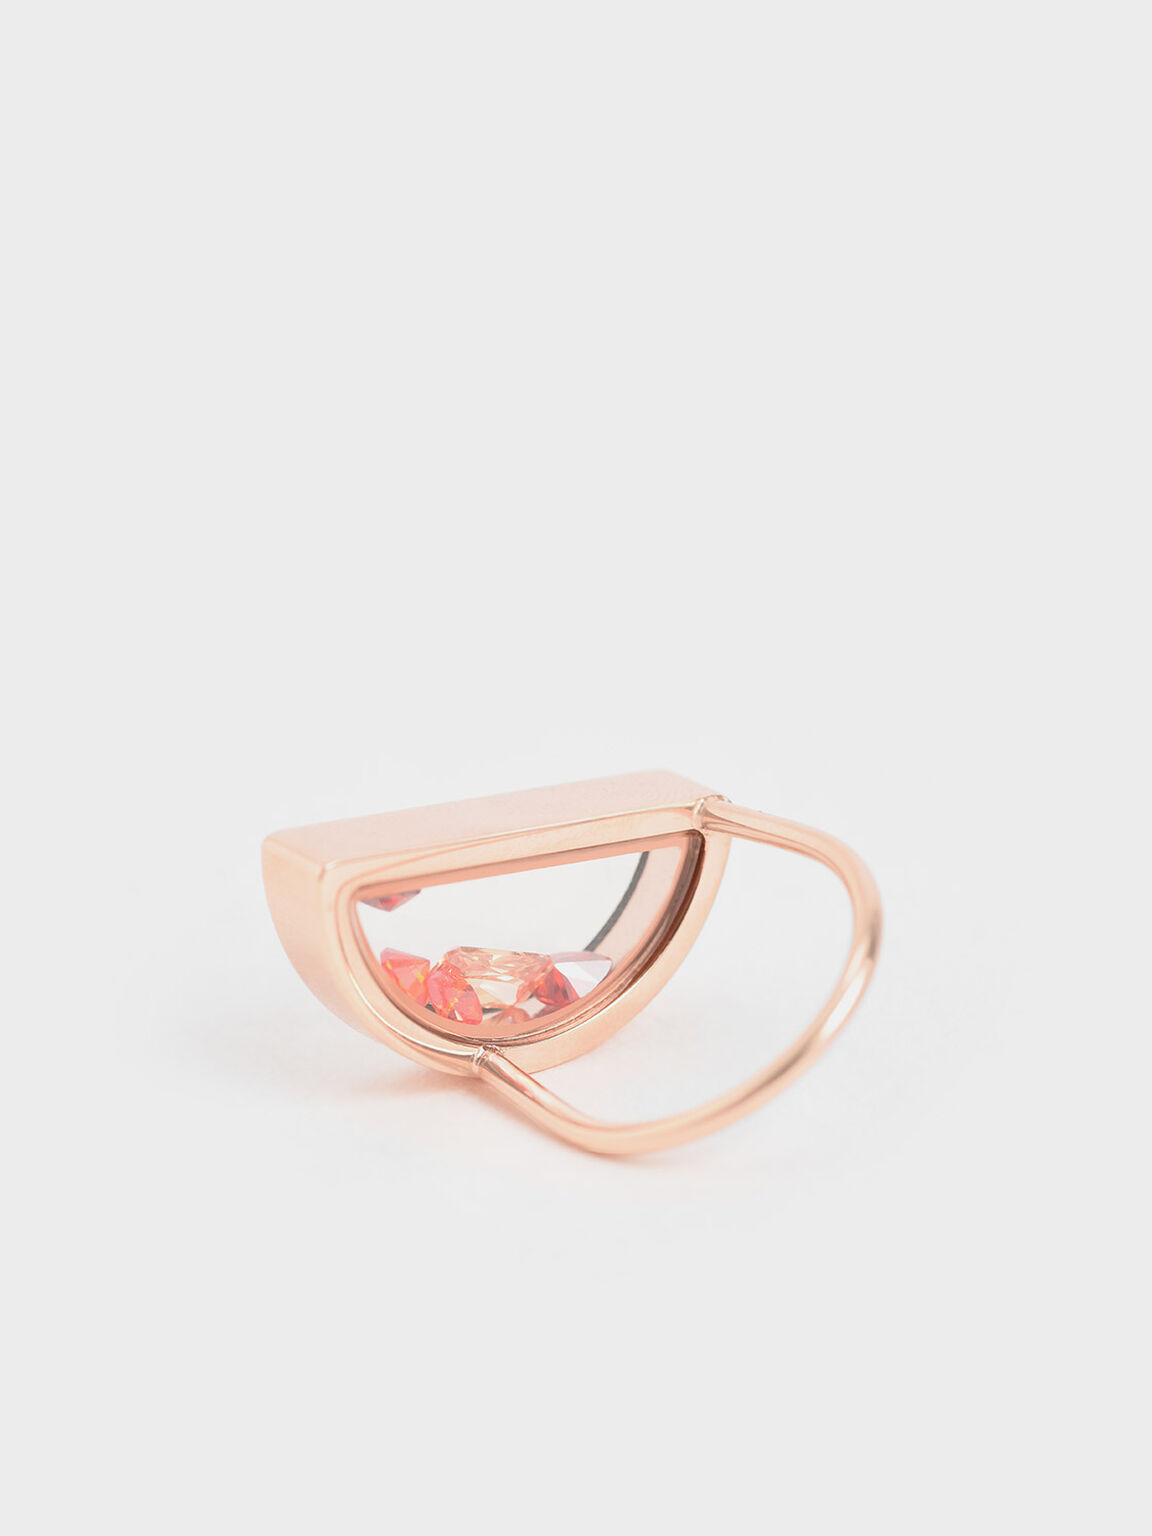 Semi-Circle Floating Locket Ring, Rose Gold, hi-res